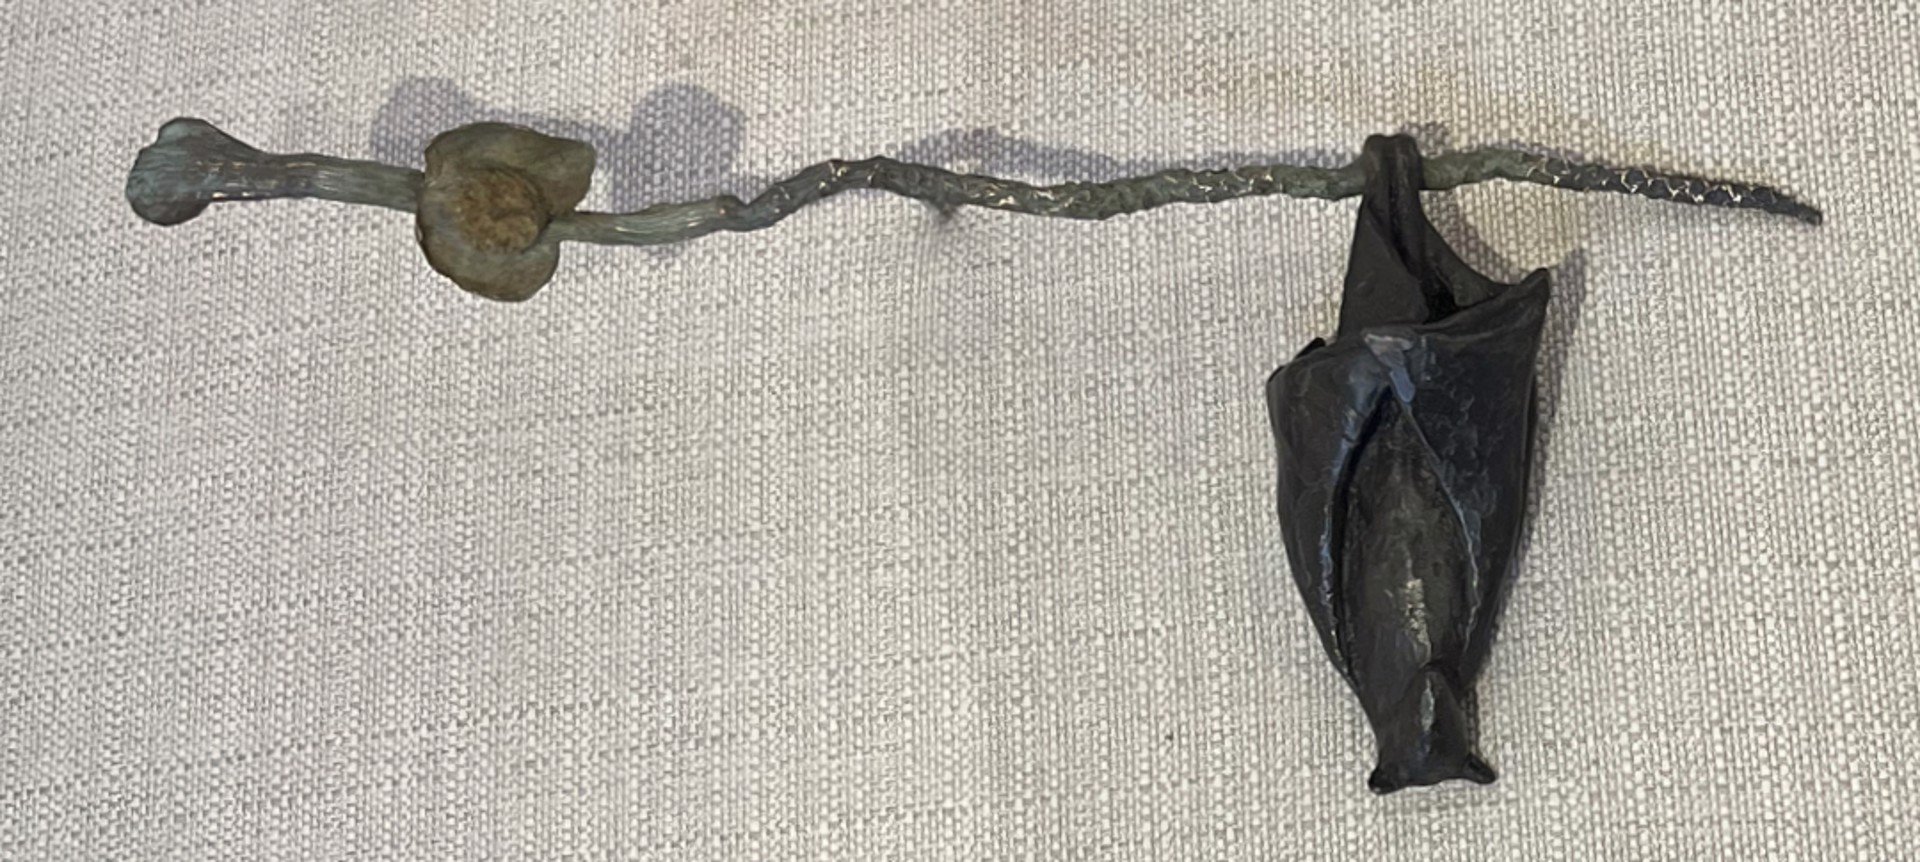 Temple Bat on a Coconut Branch, Smallish Flower by Copper Tritscheller